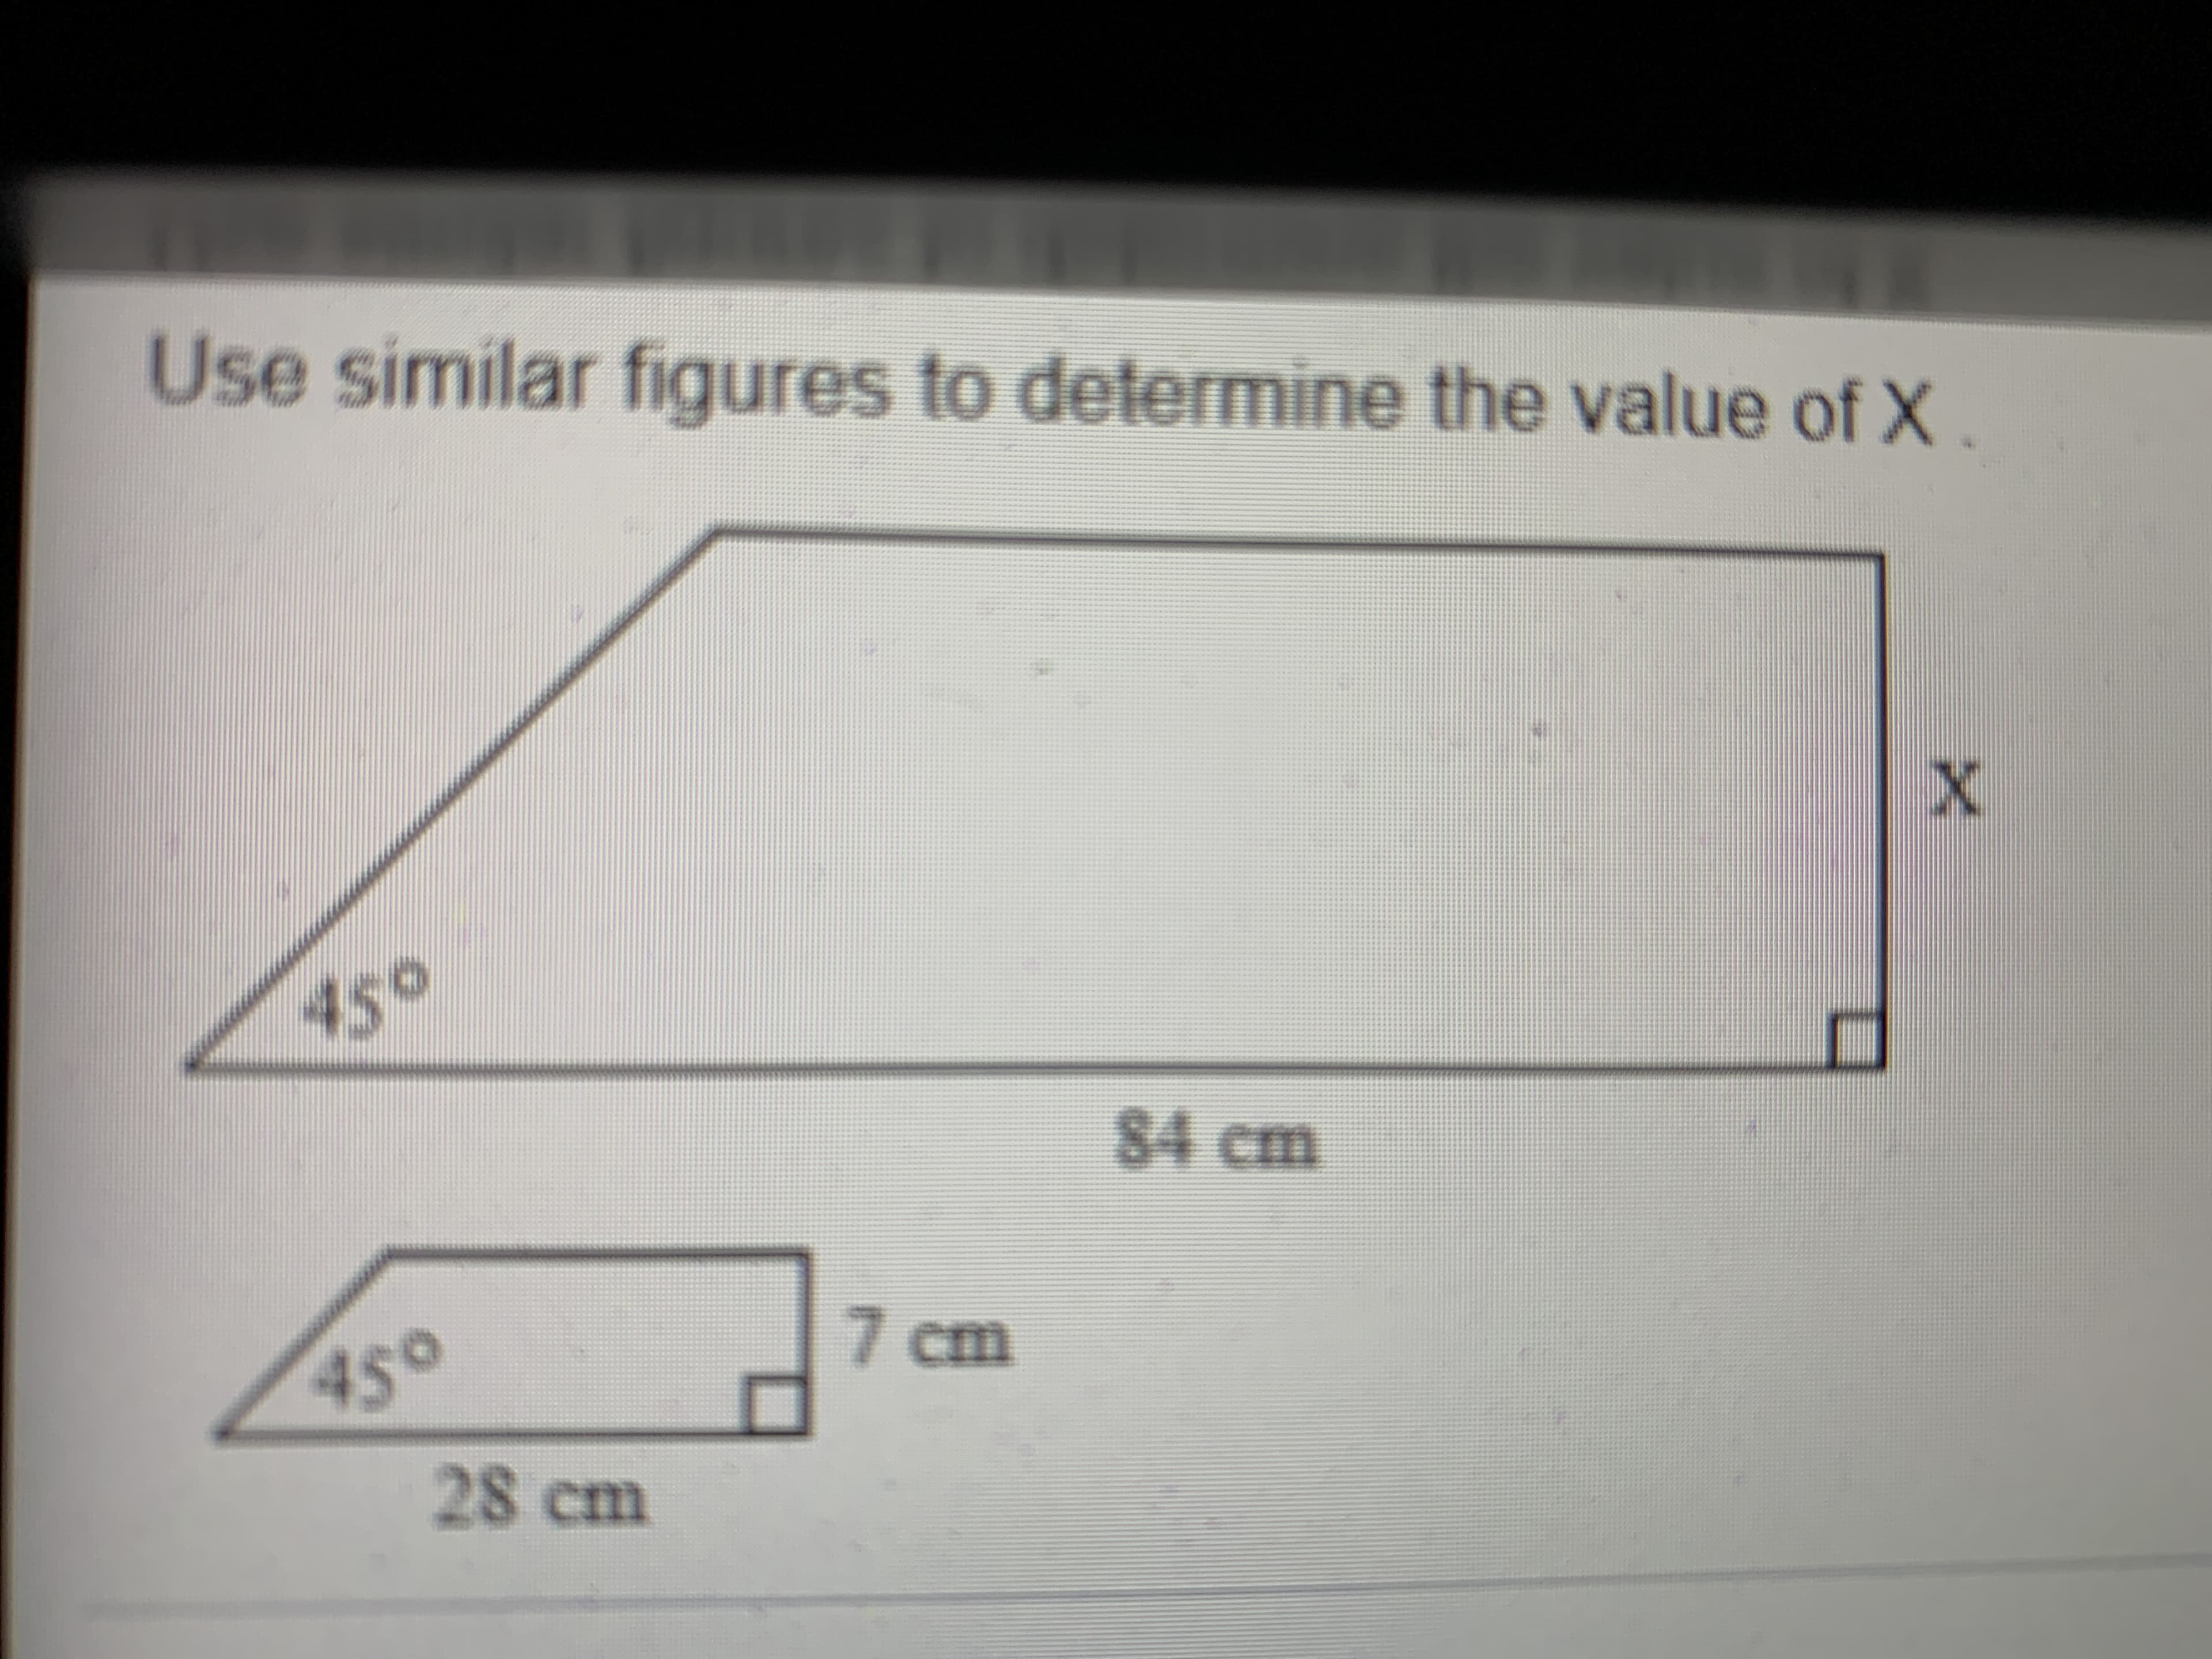 Use similar figures to determine the value of X
450
84 cm
450
7 cm
28cm
